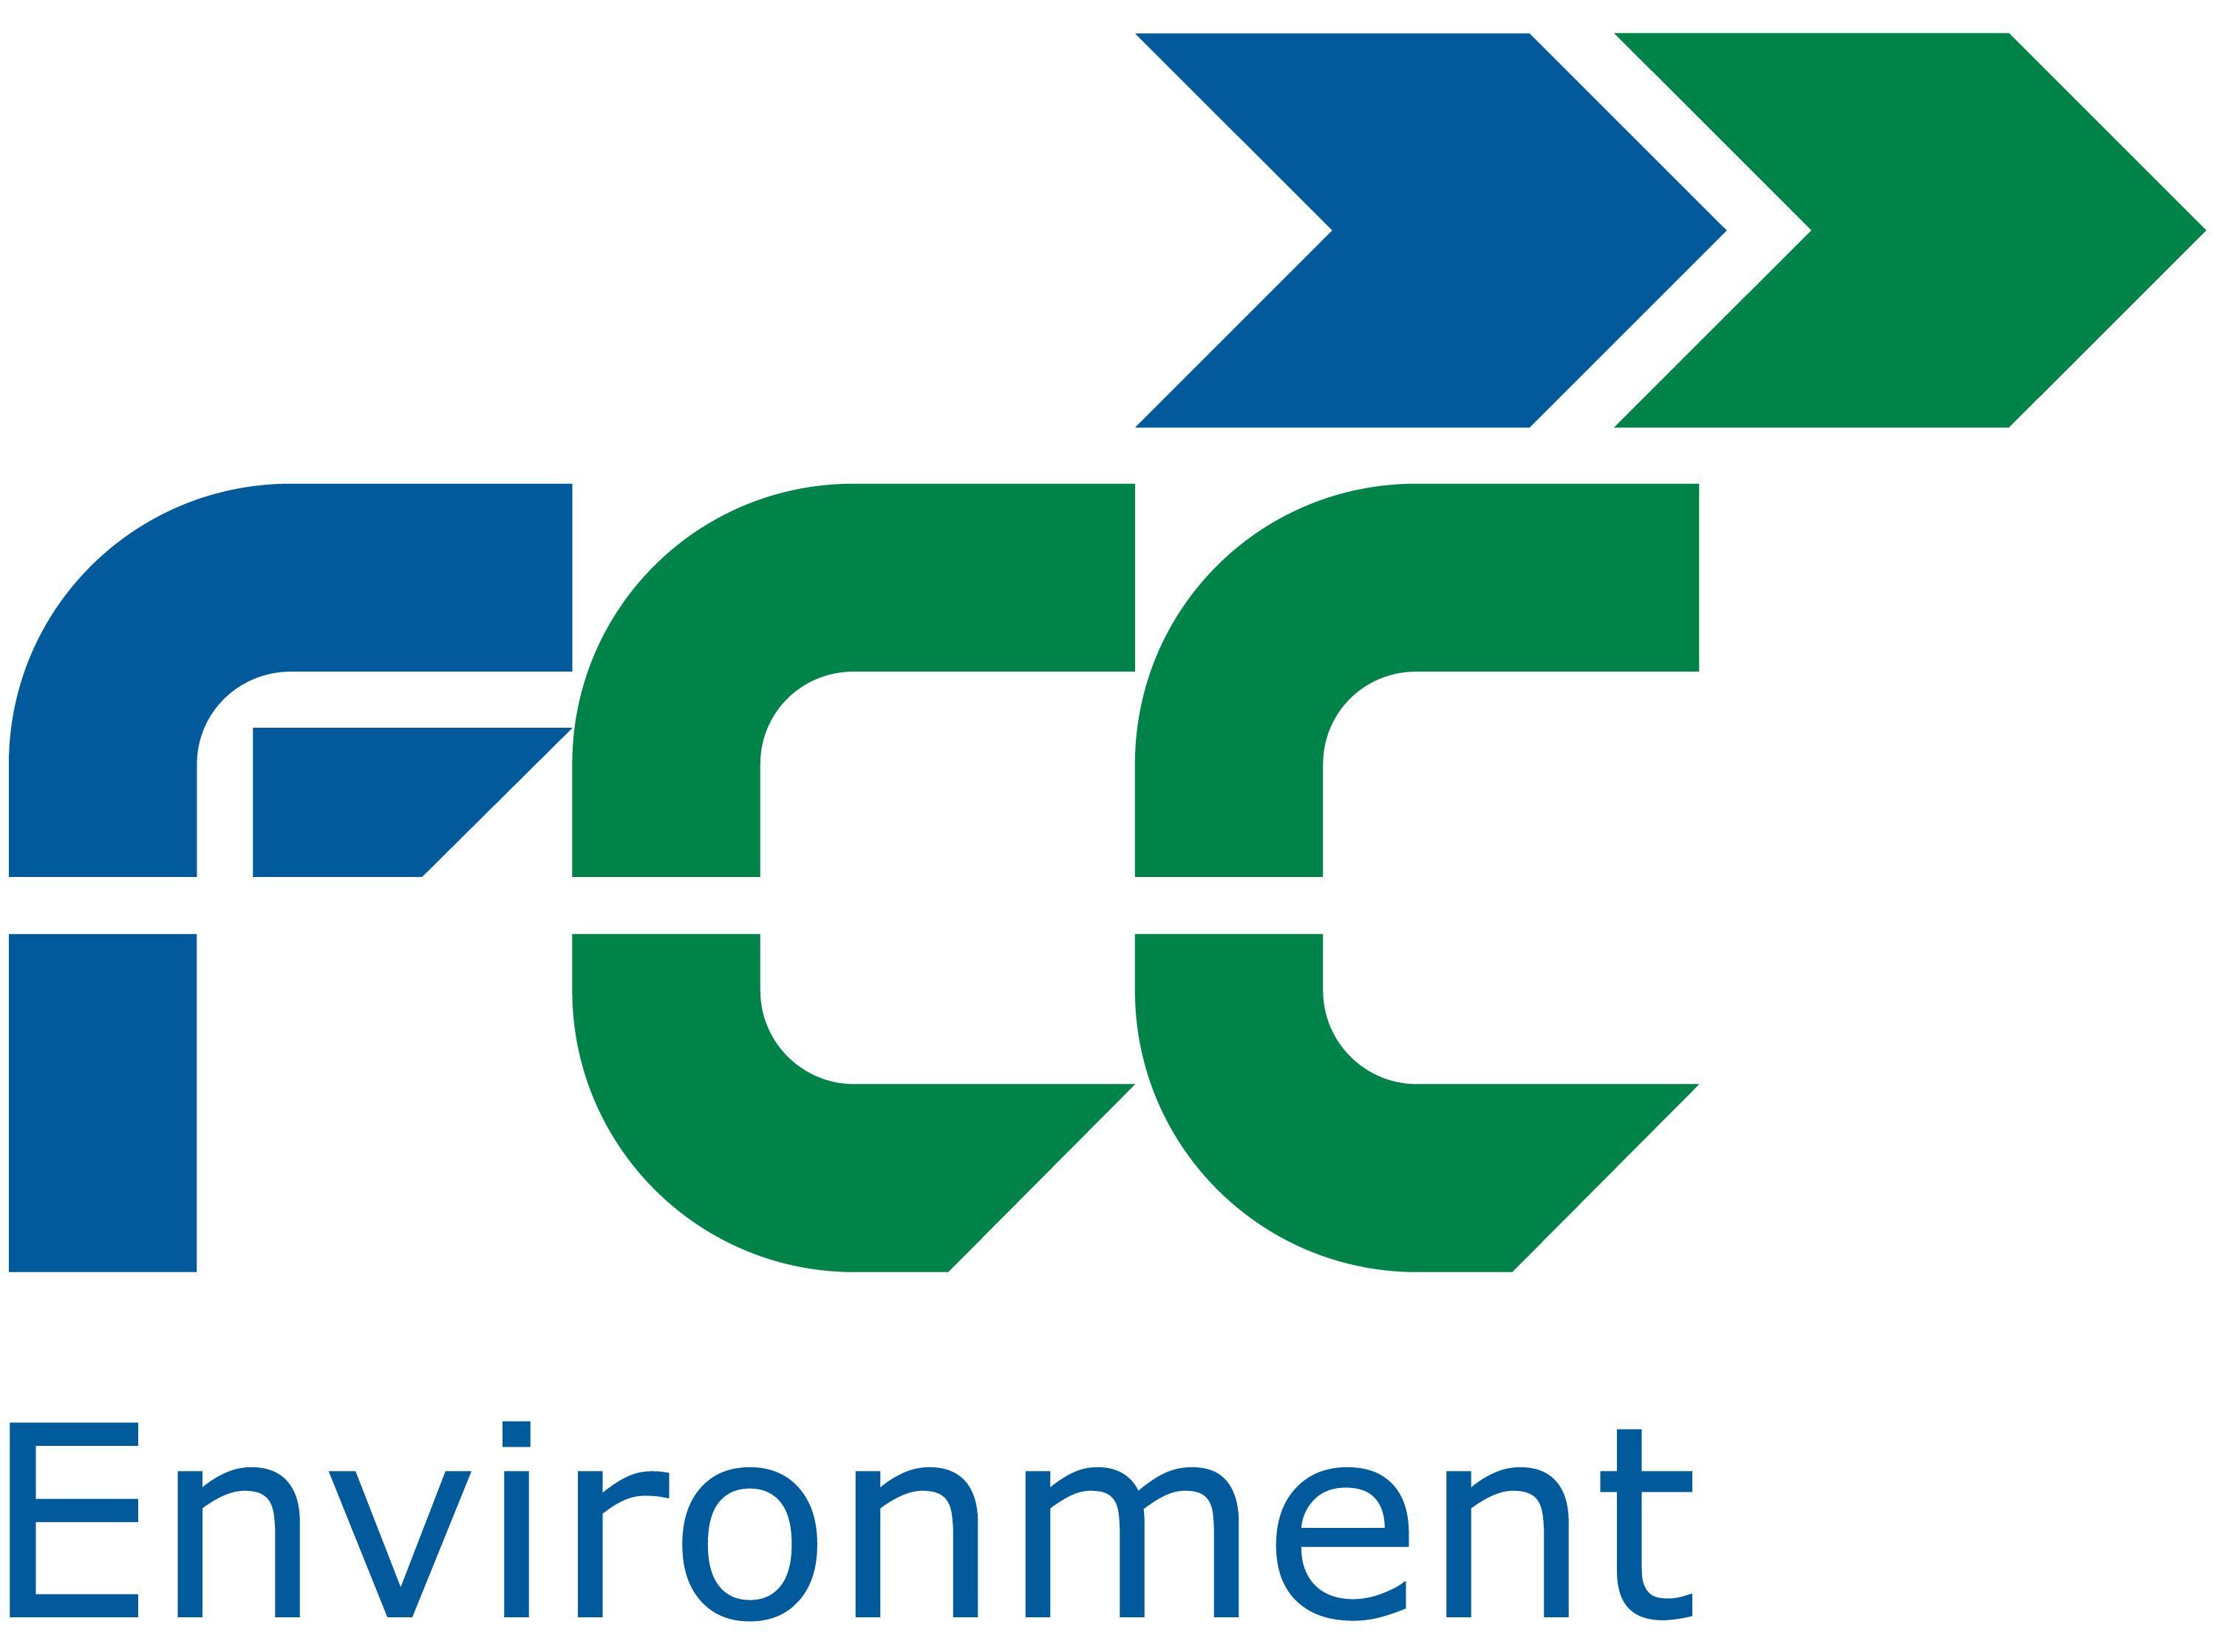 FCC Logo - Image Gallery